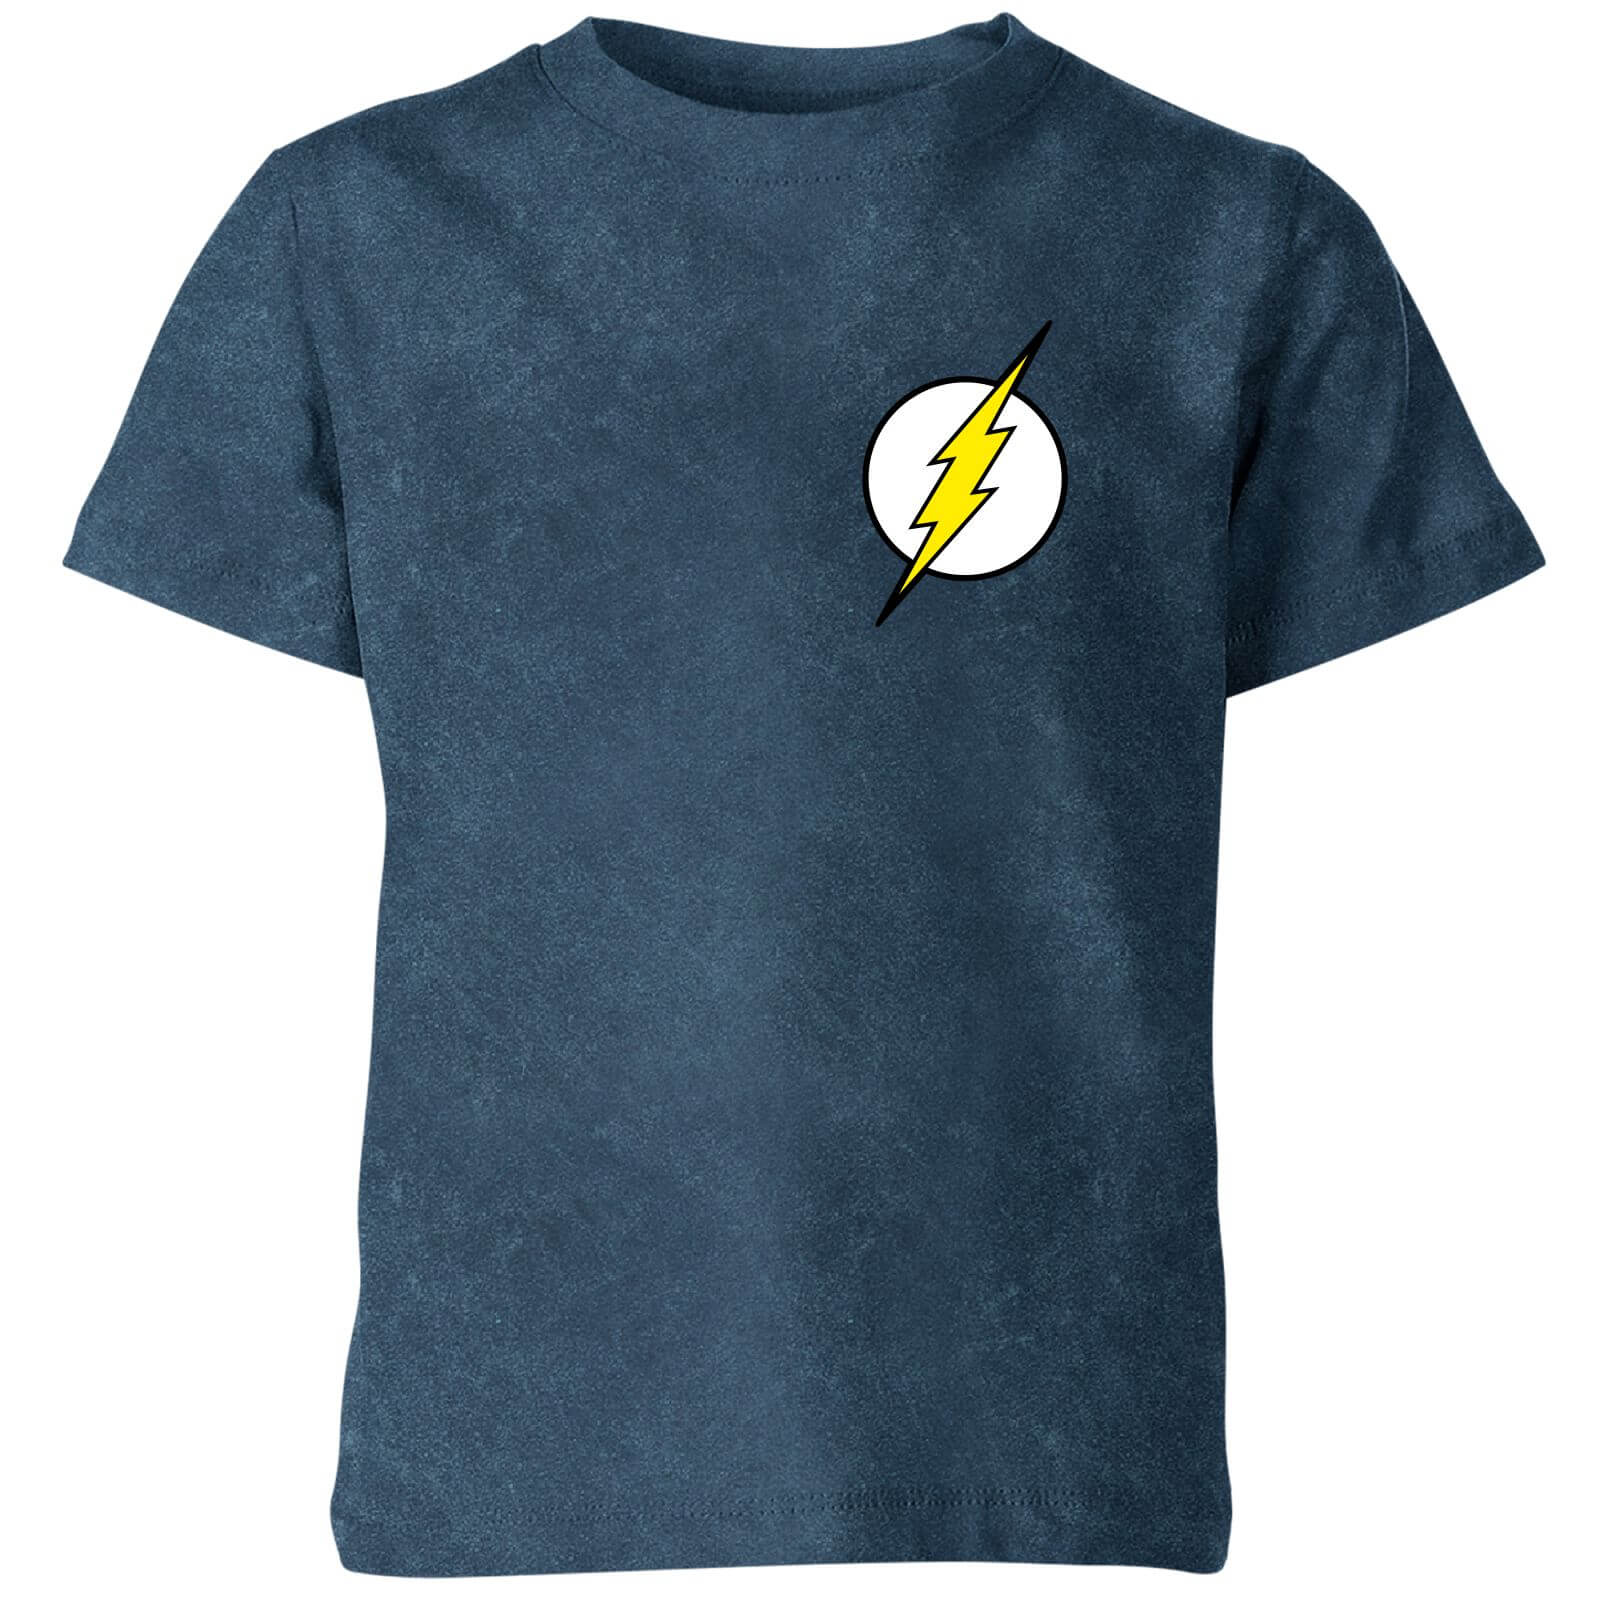 Flash Gordon Kids' T-Shirt - Navy Acid Wash - 9-10 Years - Navy Acid Wash